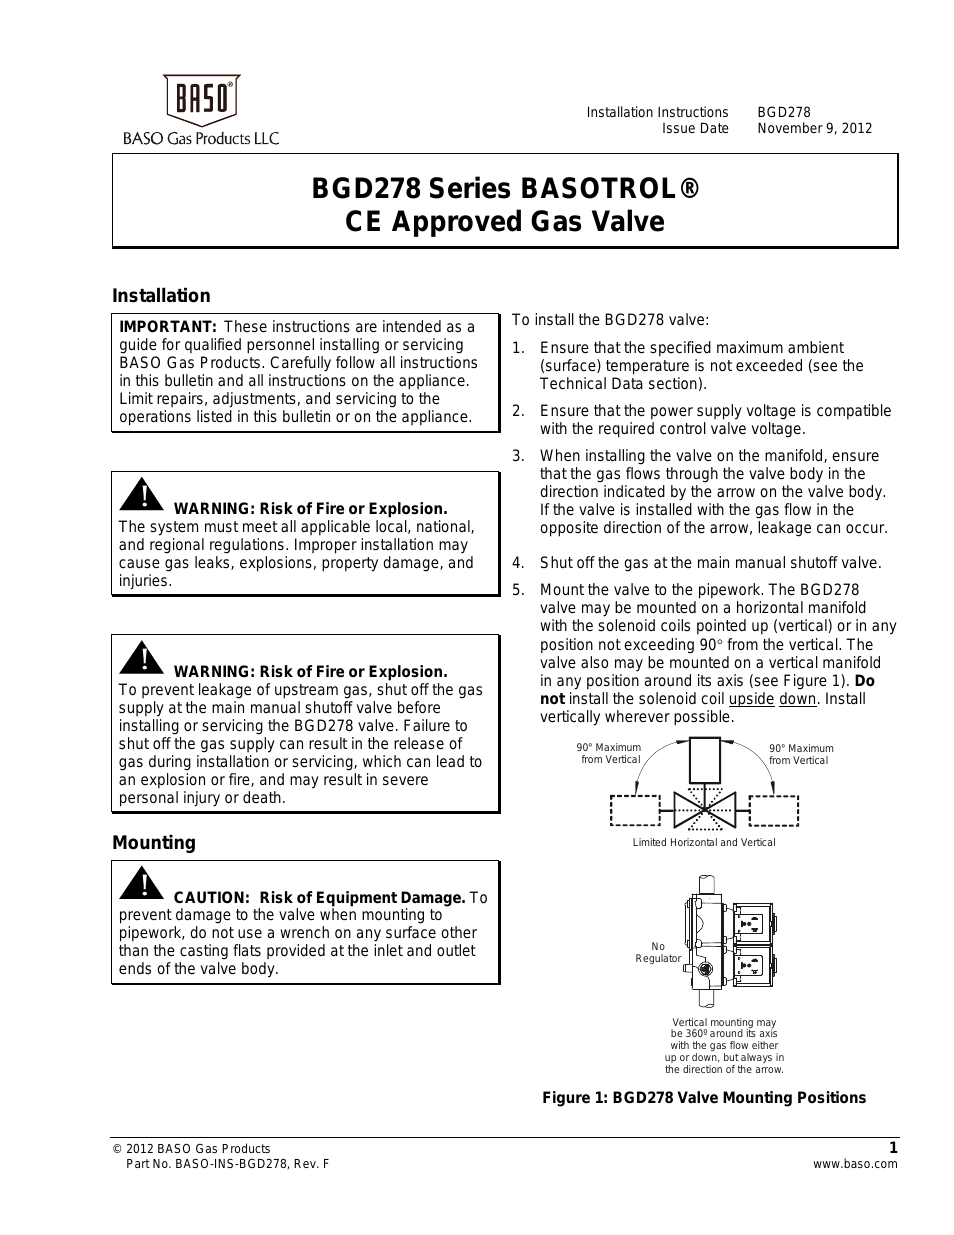 BGD278 Series BASOTROL CE Approved Gas Valve